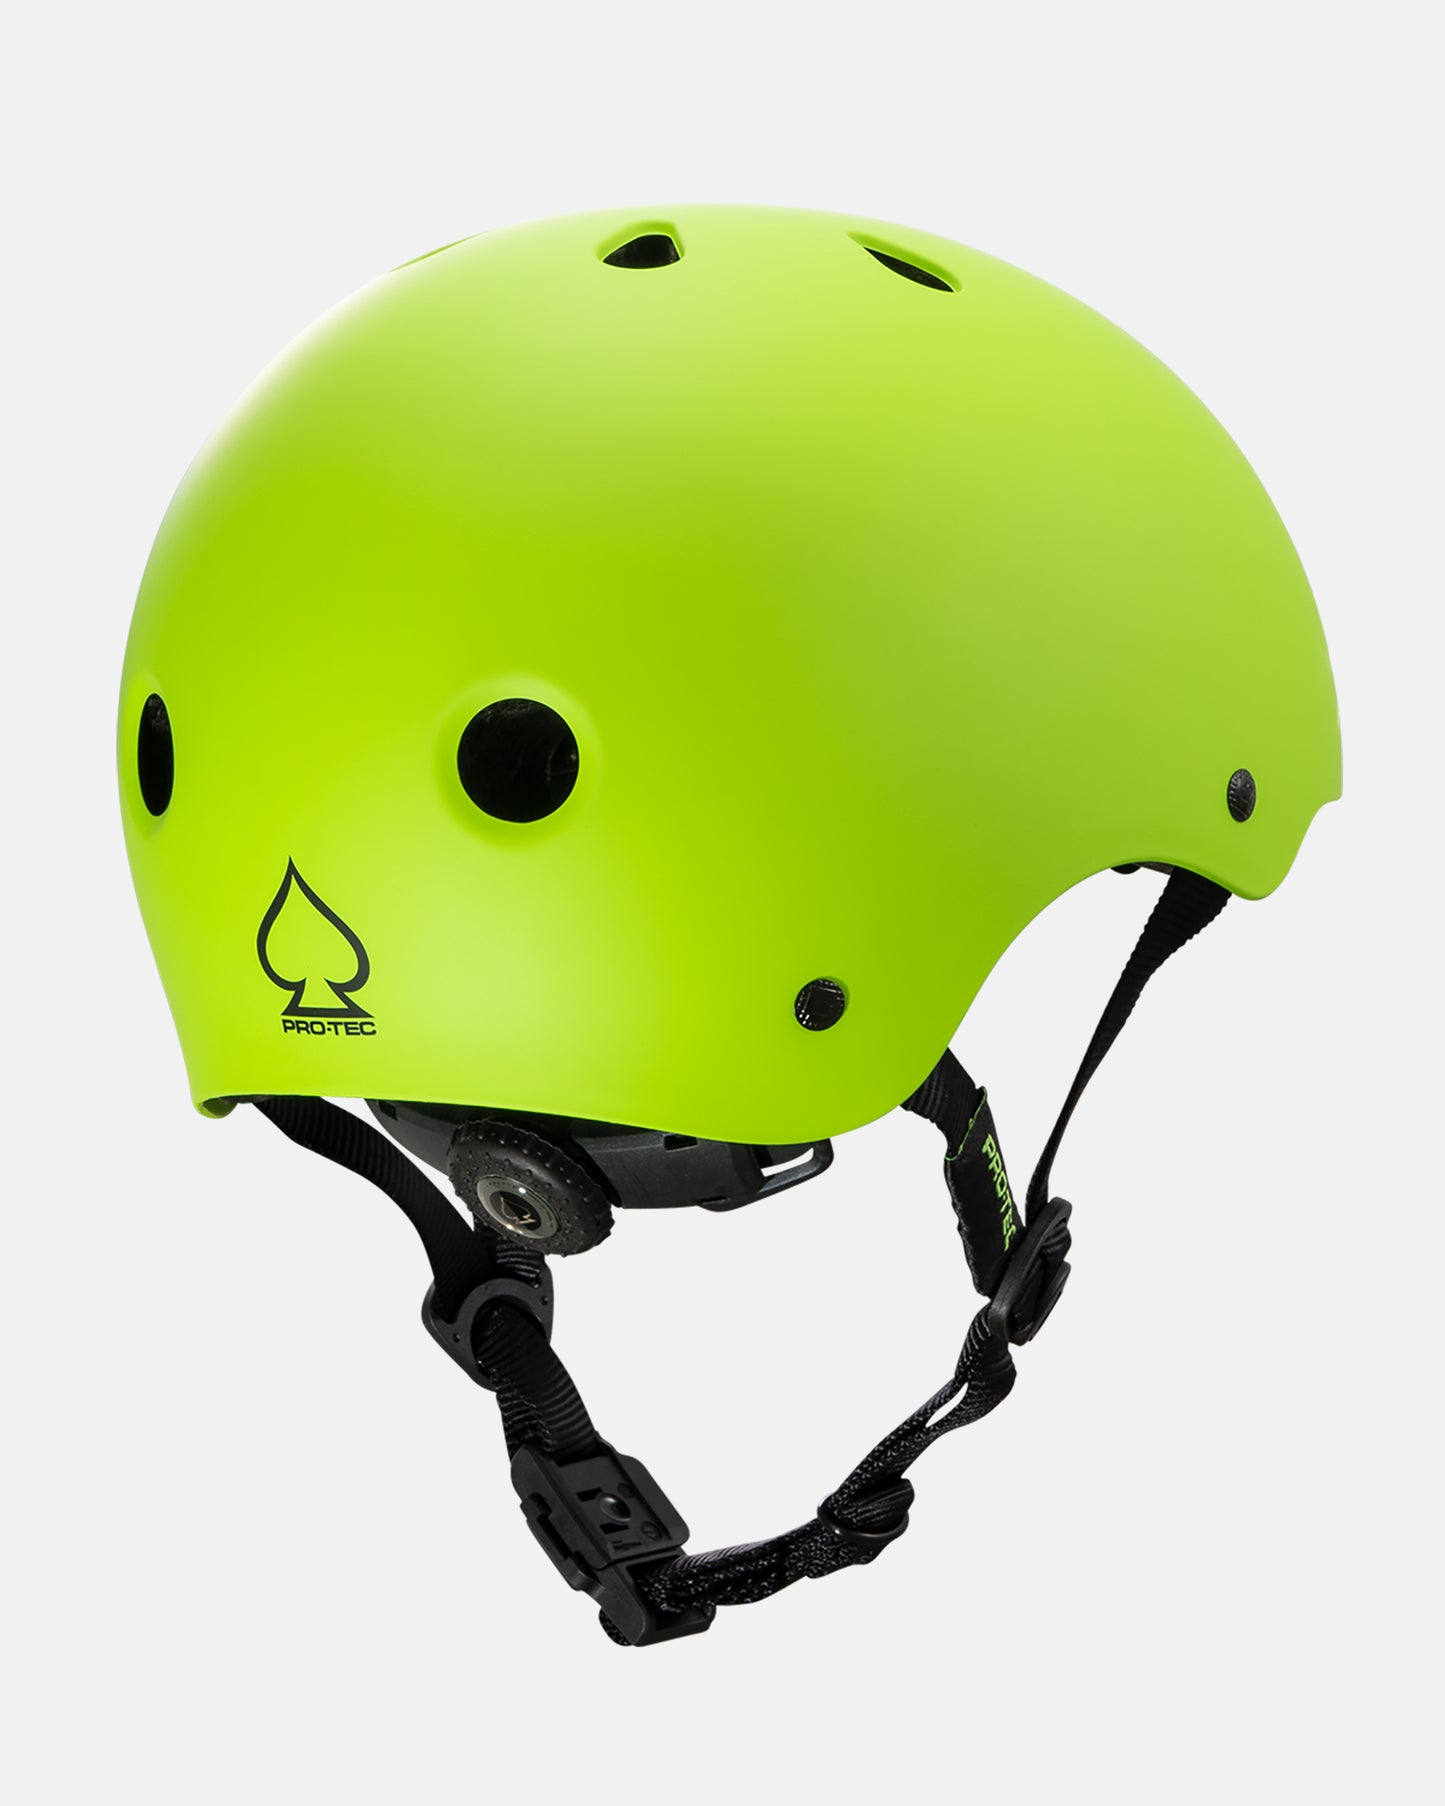 Protec Junior Classic Fit Helmet (Certified) - Matte Lime - Impala Rollerskates